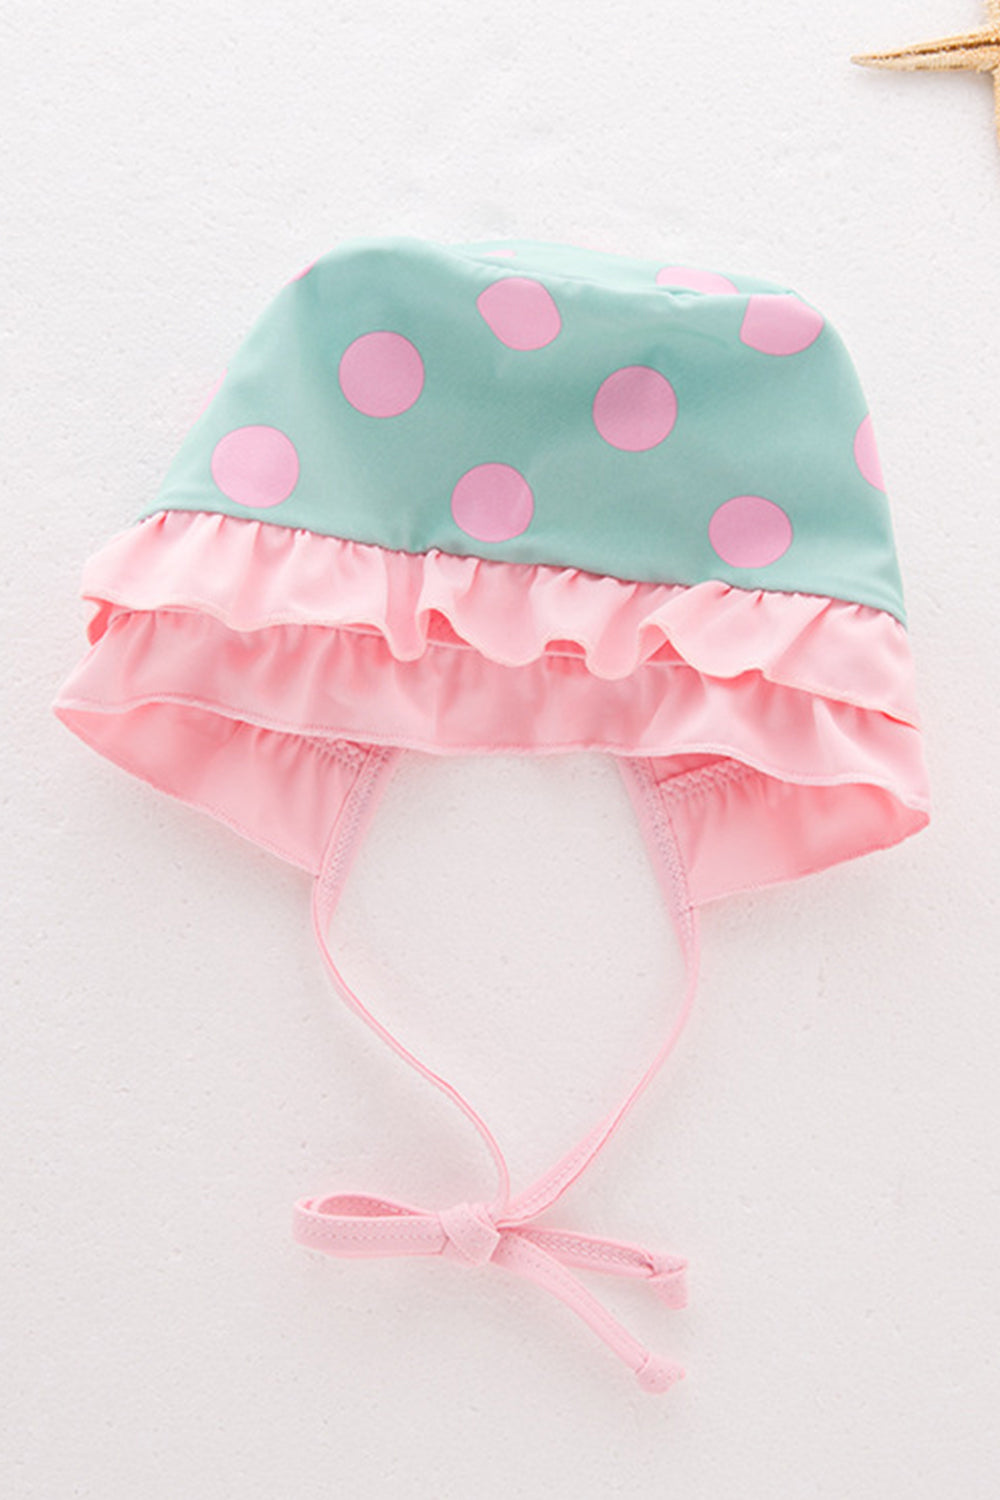 Iyasson Polka Dot Printing Baby Girl Swimsuit With Sweet Bow